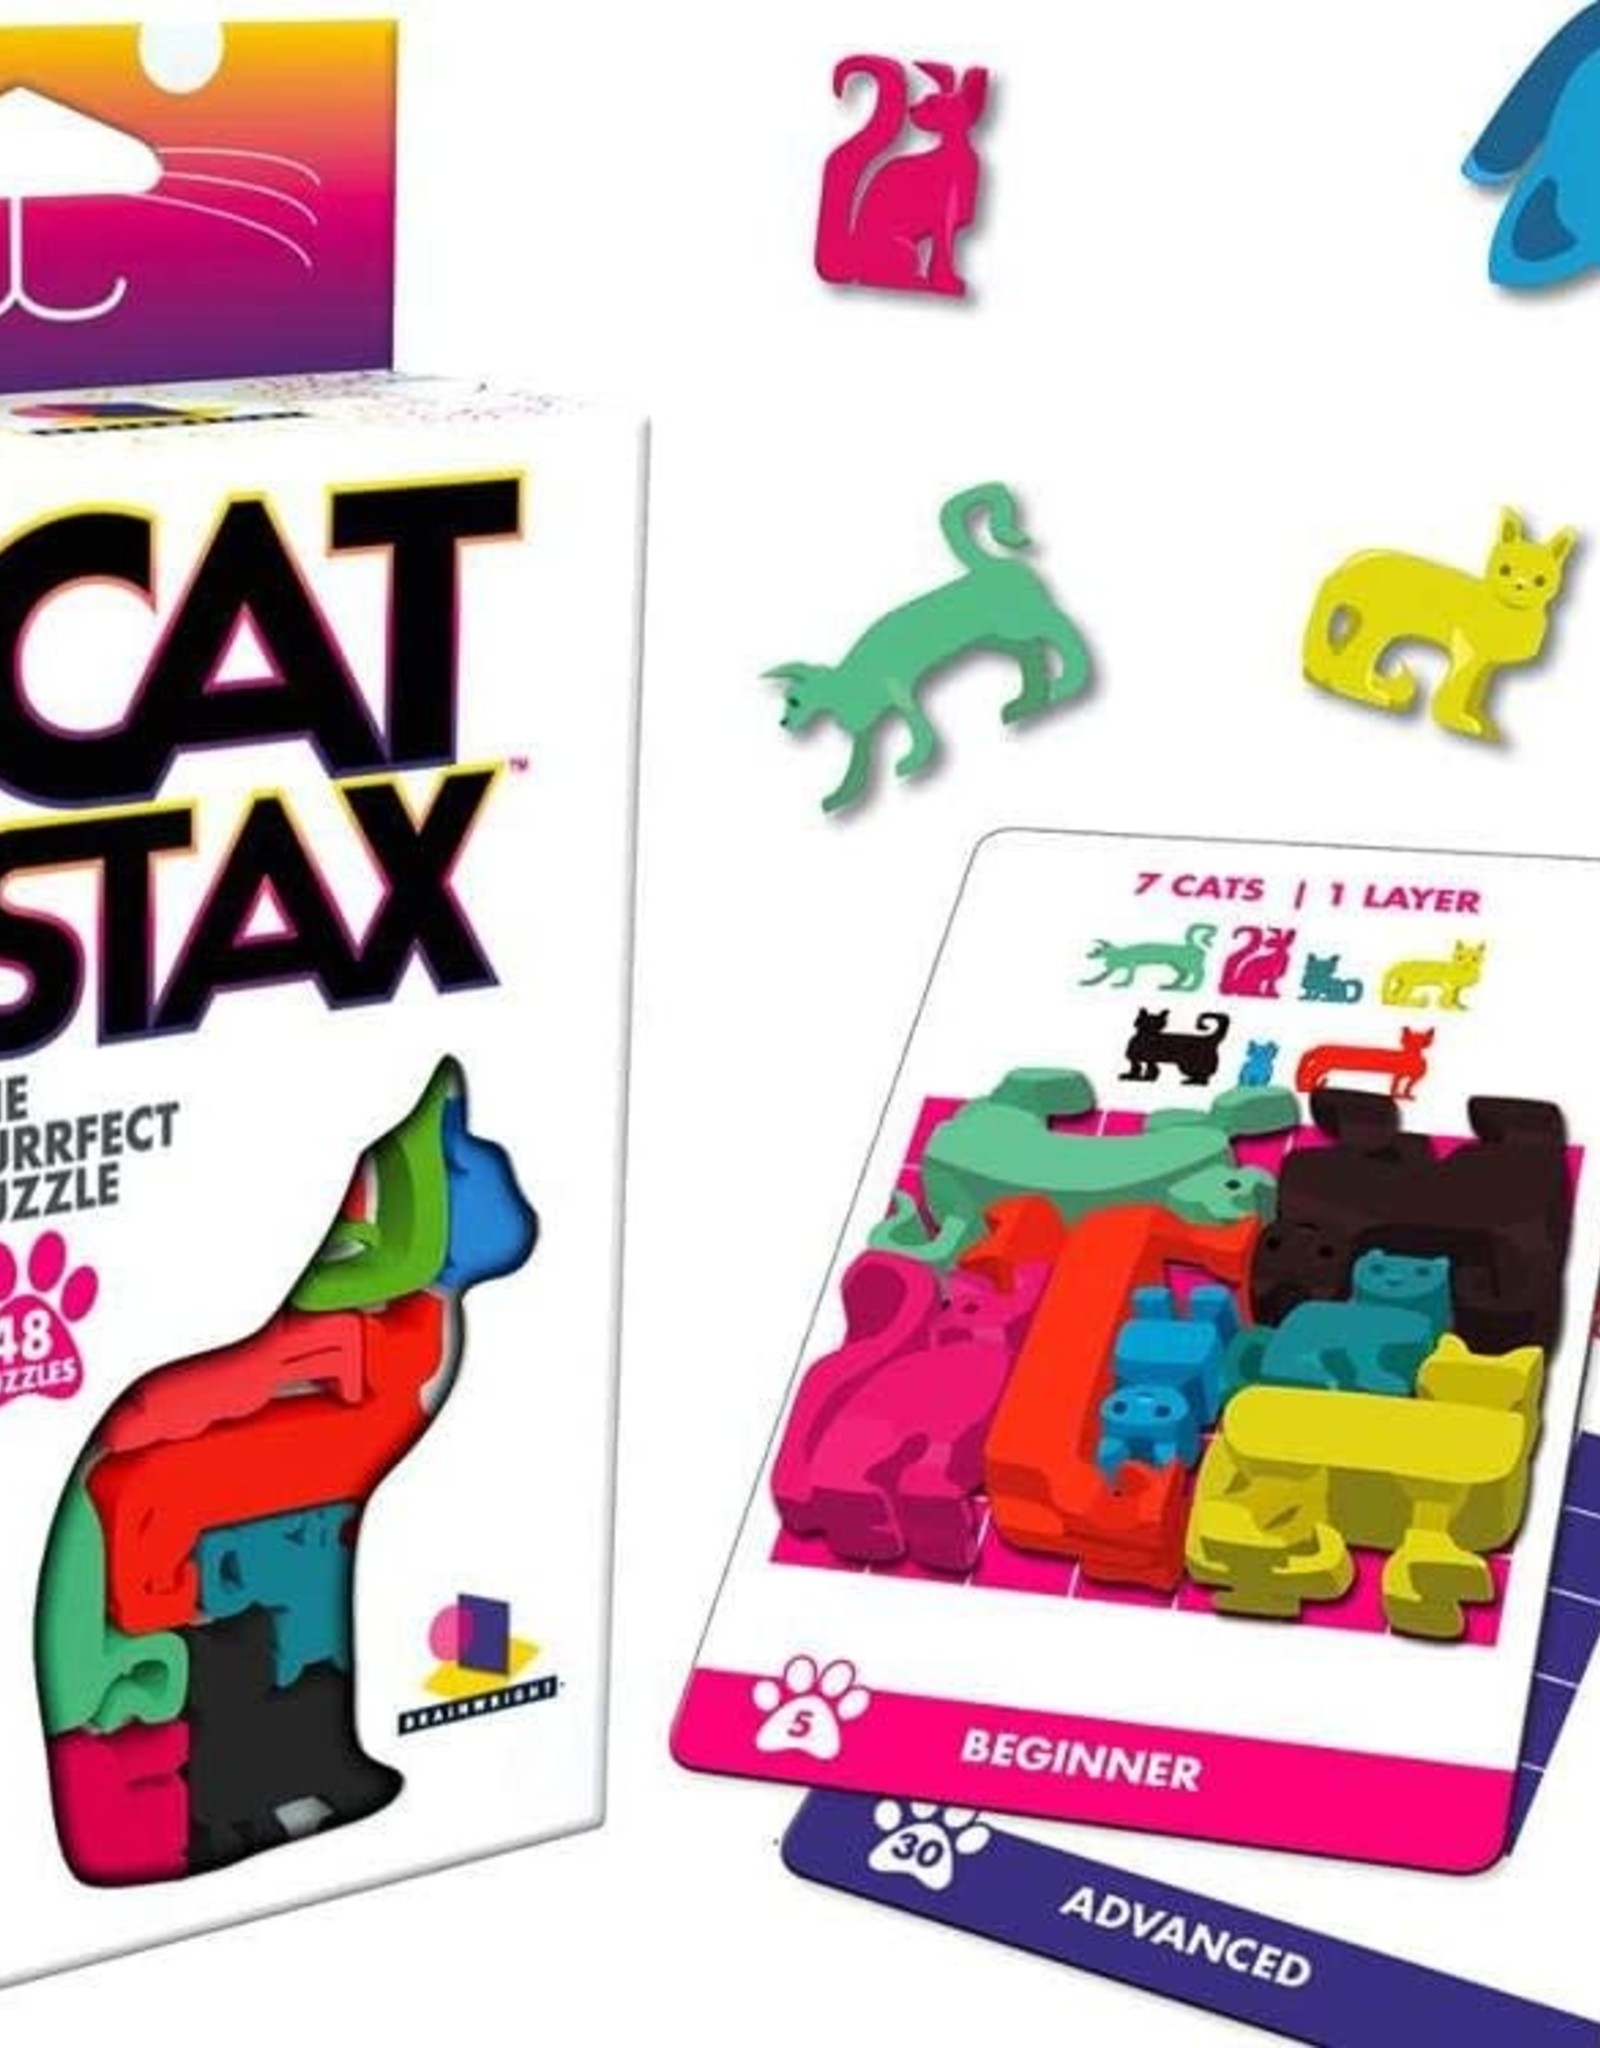 Gamewright Cat Stax Brainteaser